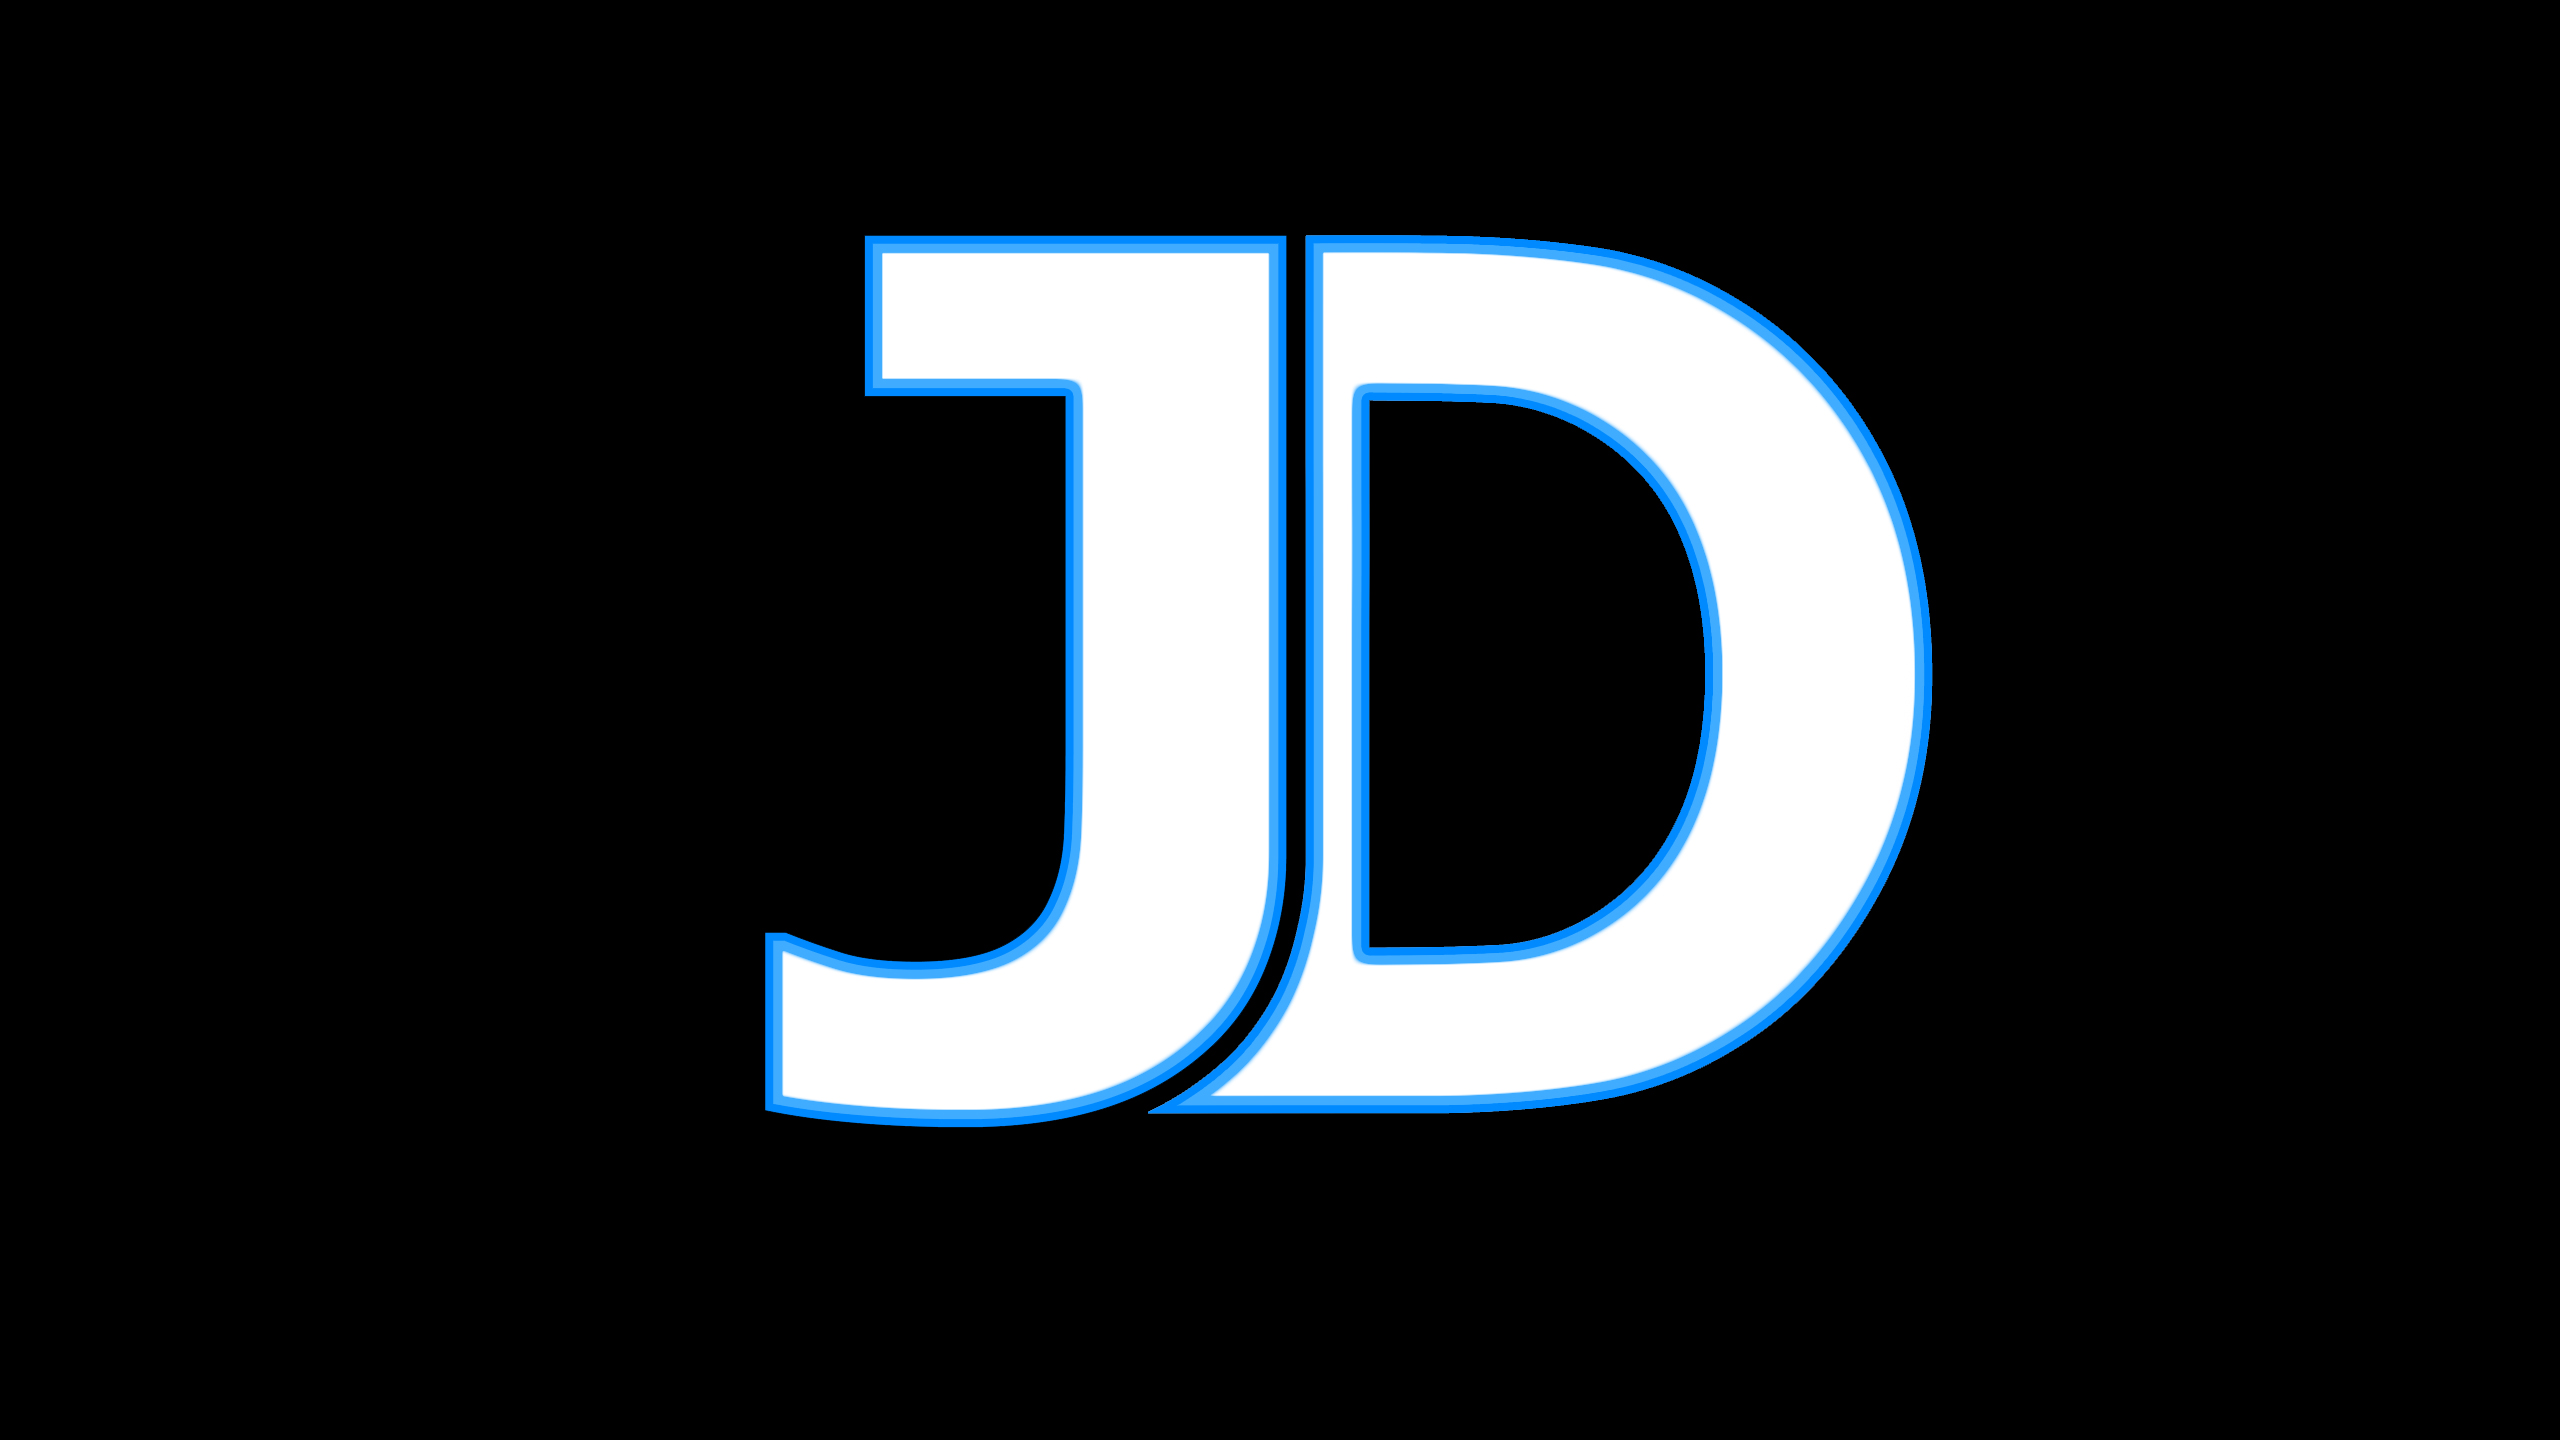 JD logo by JD1512 on DeviantArt